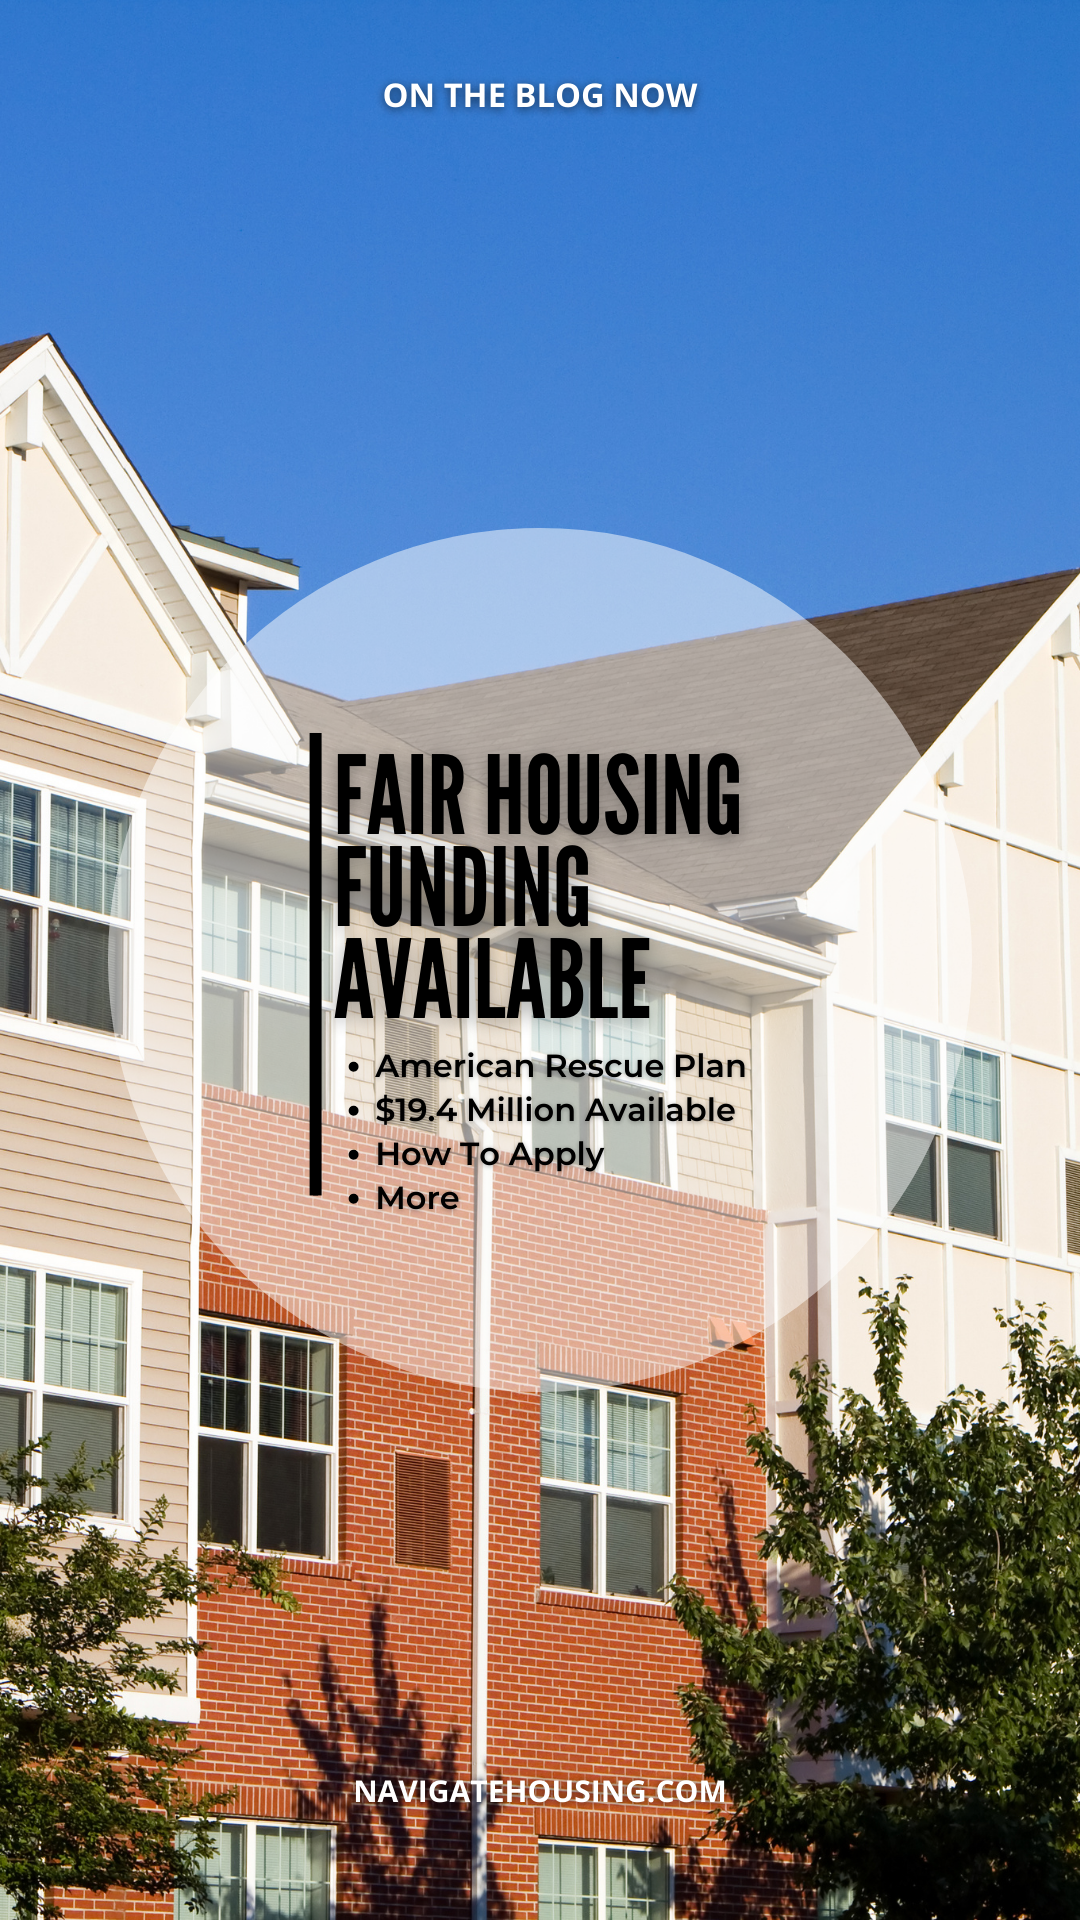 Fair Housing Funding Available